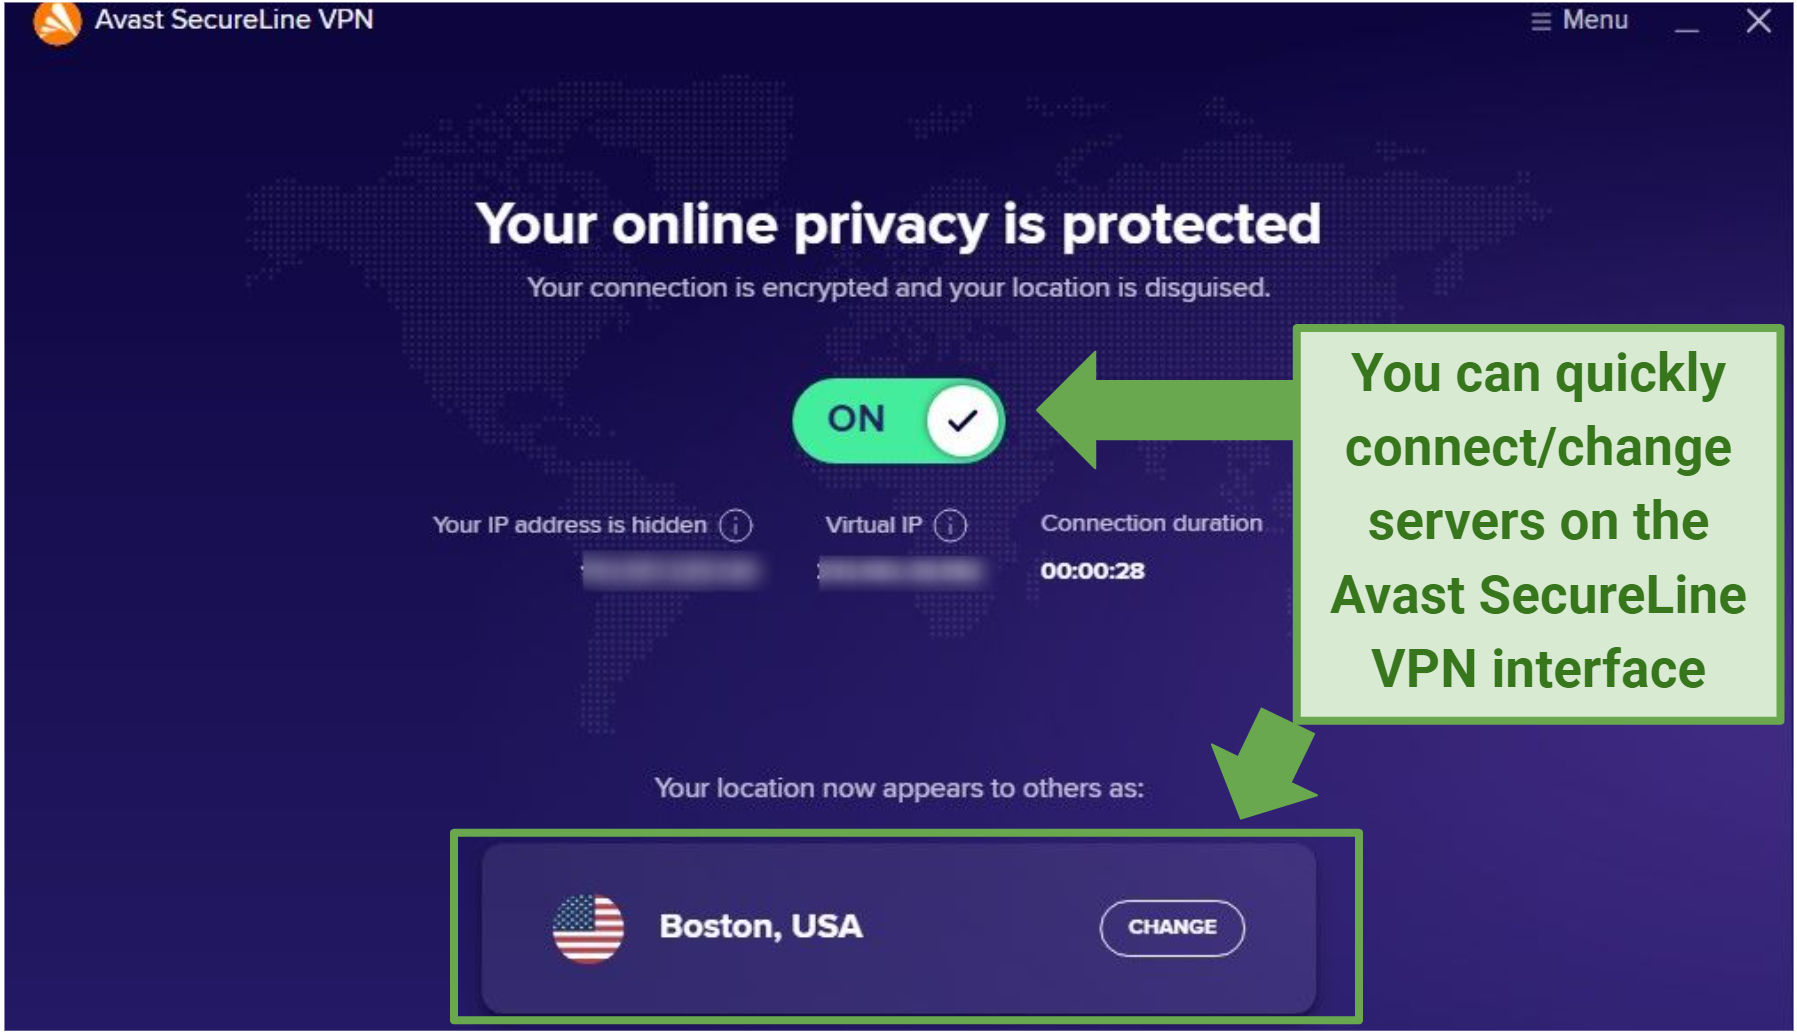 A screenshot of Avast SecureLine VPN app interface